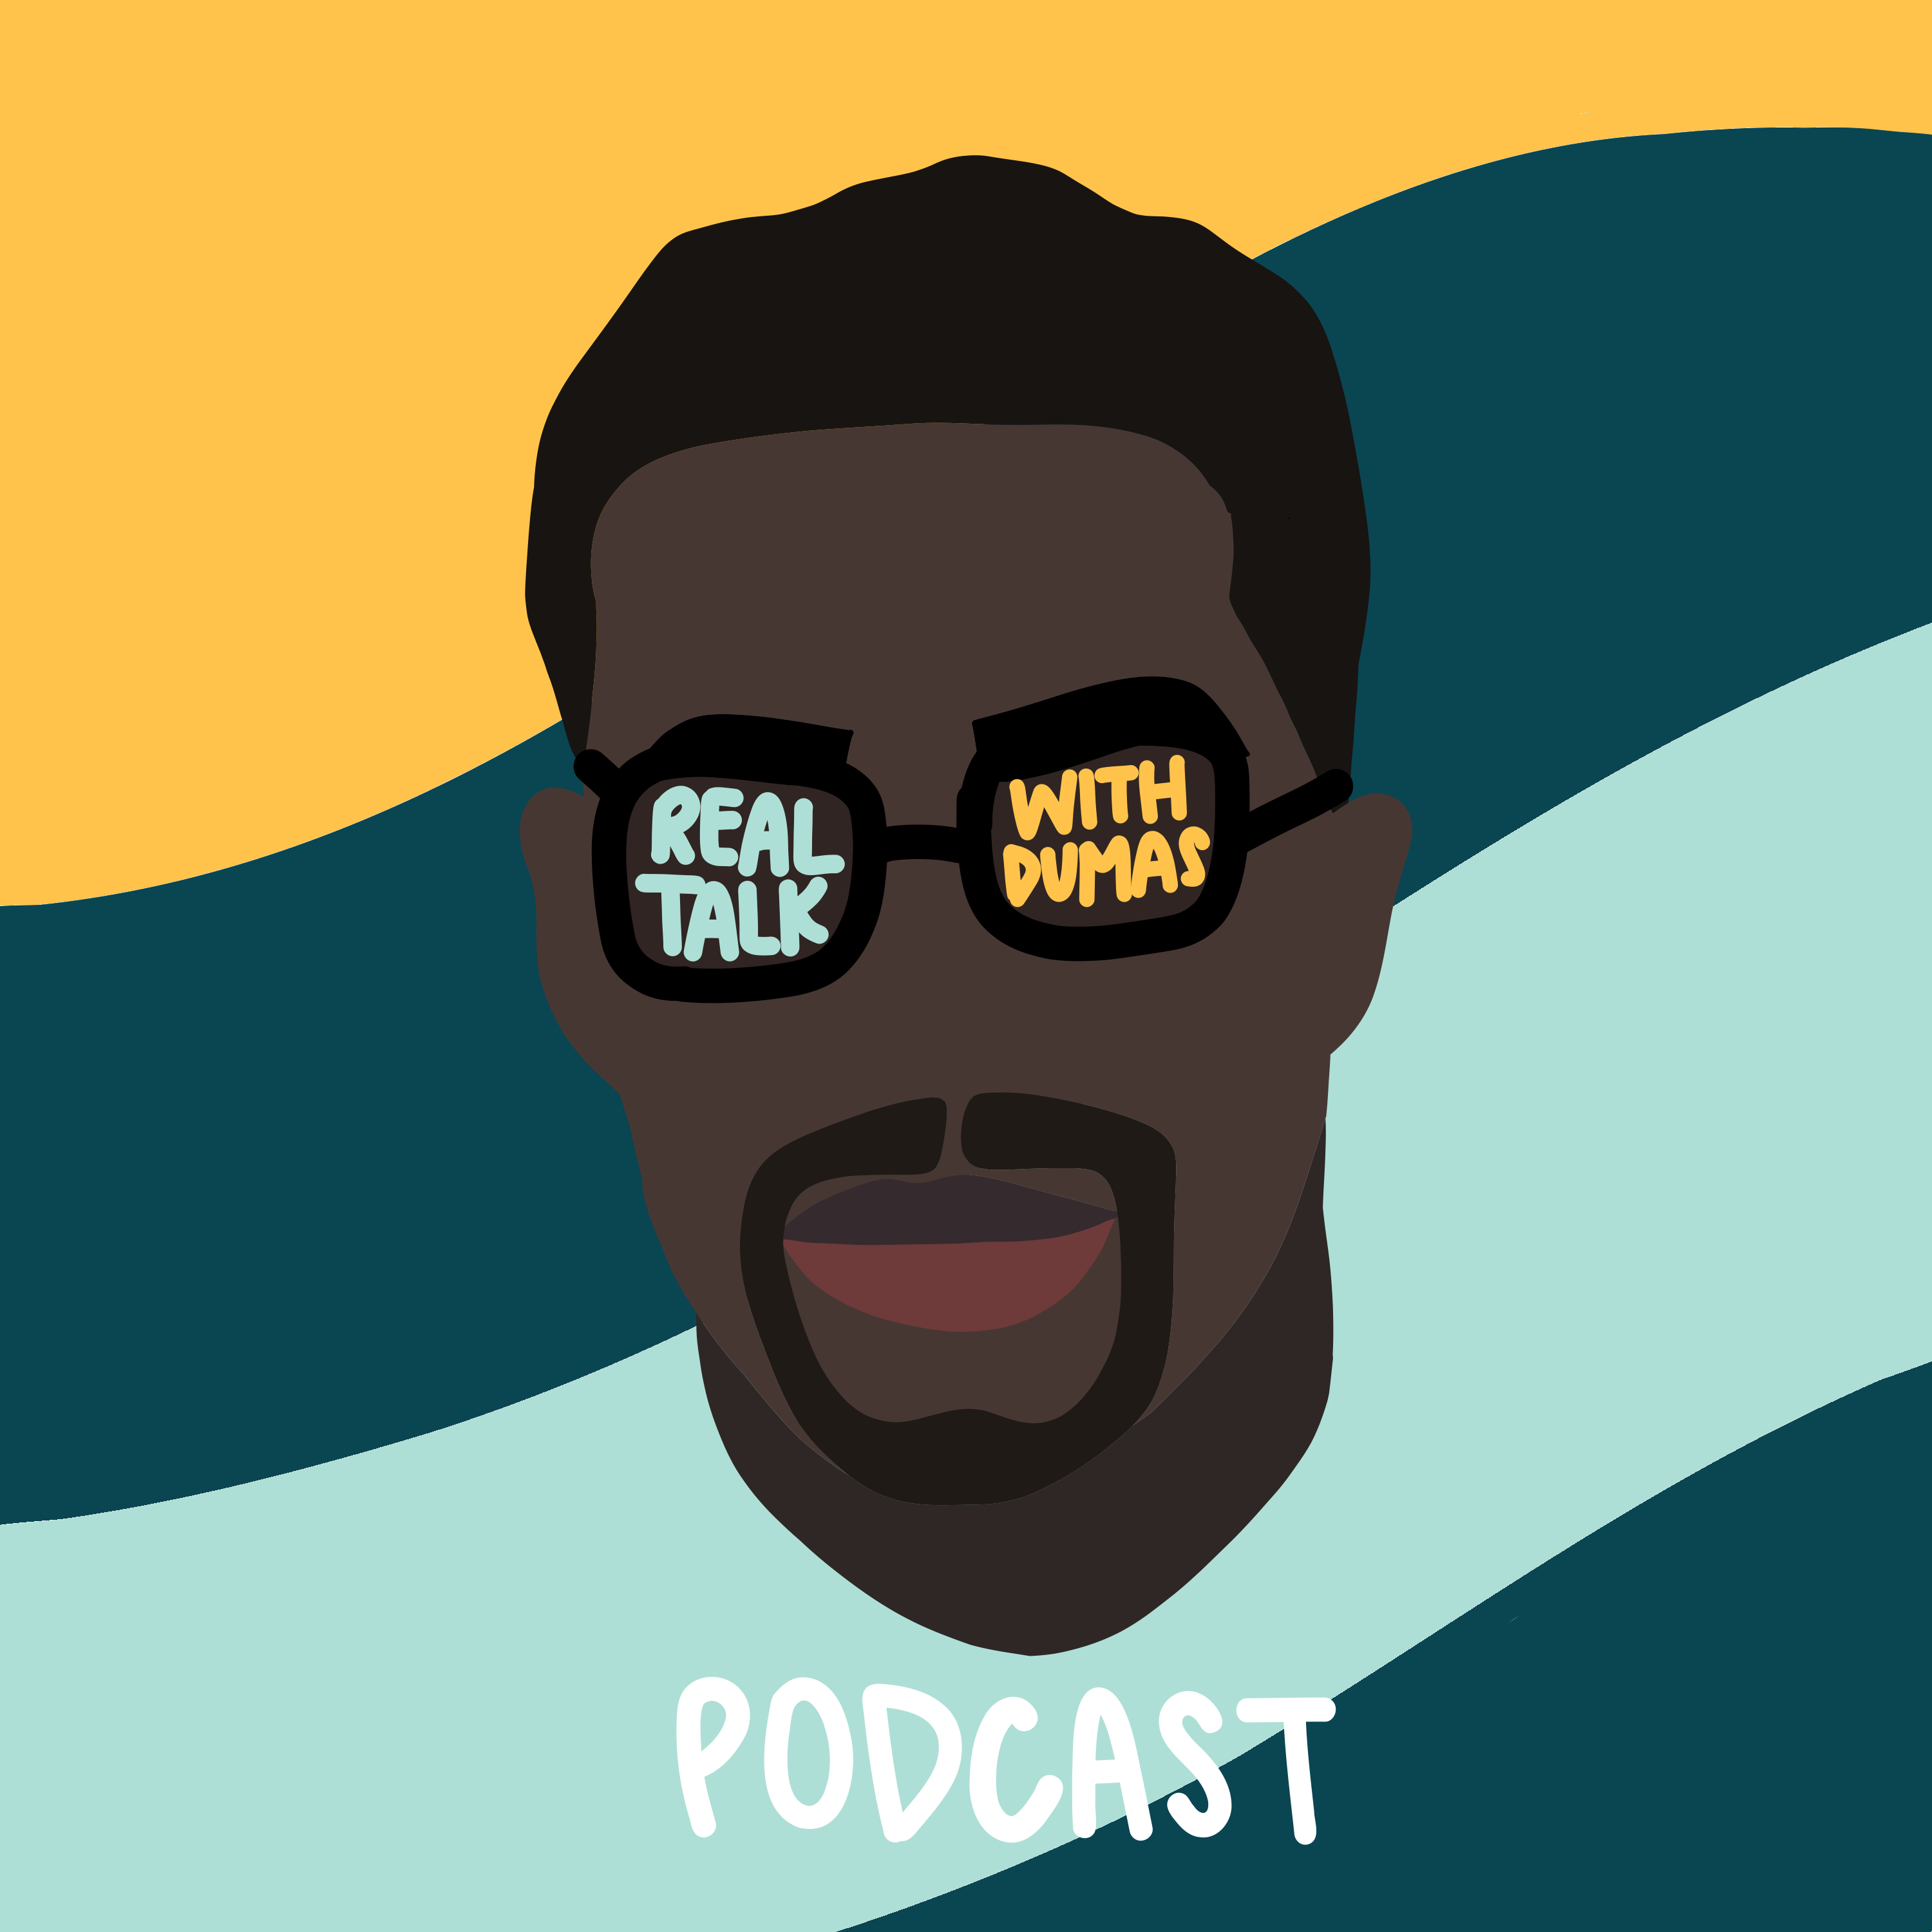 Real Talk With Dumas Podcast